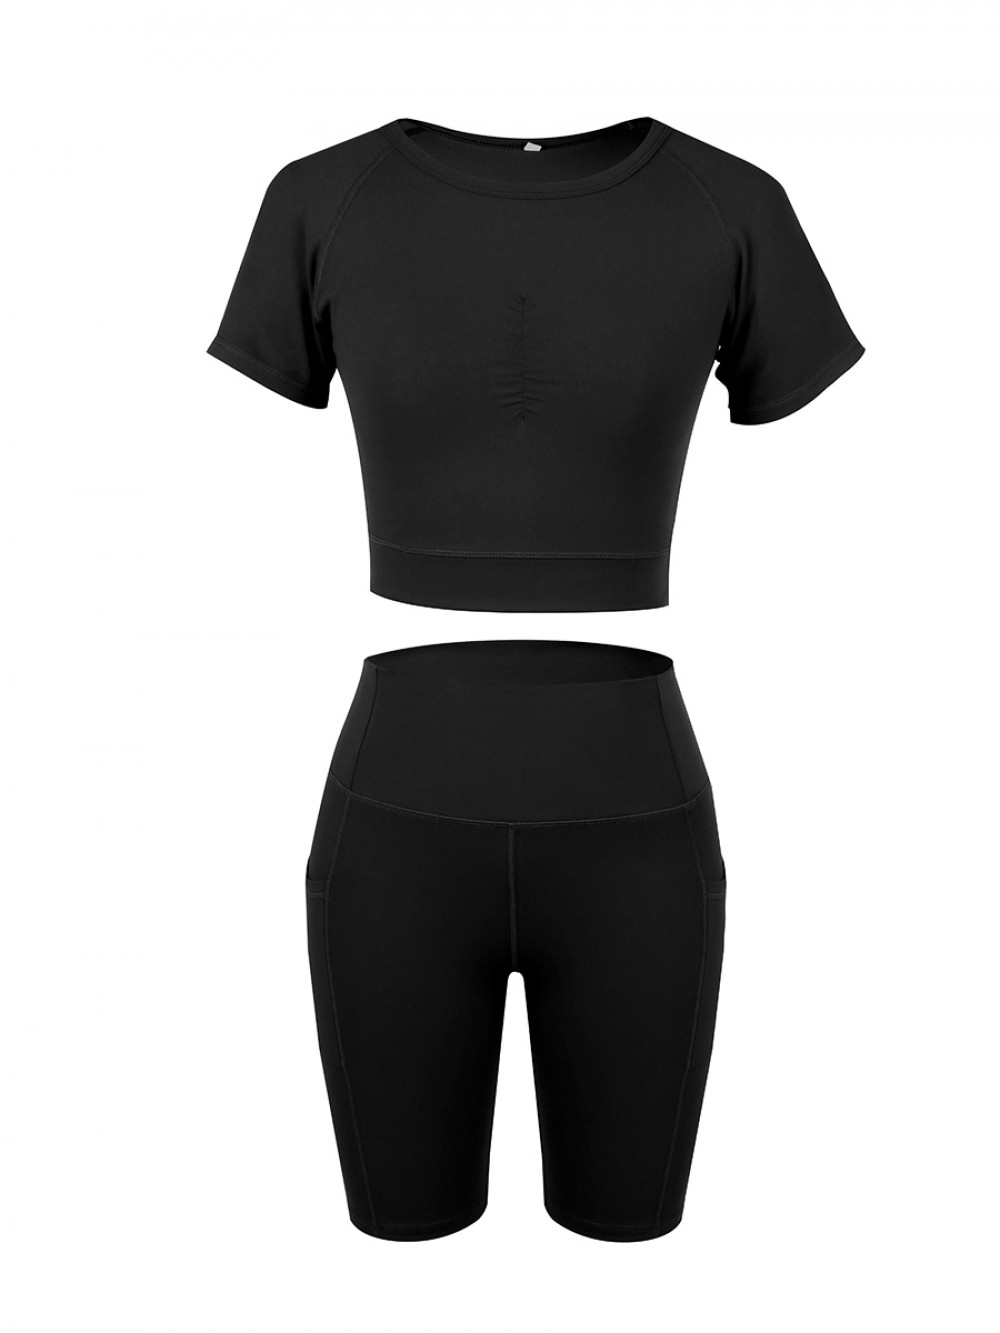 Outdoor Black Raglan Sleeve Top High Waist Shorts Preventing